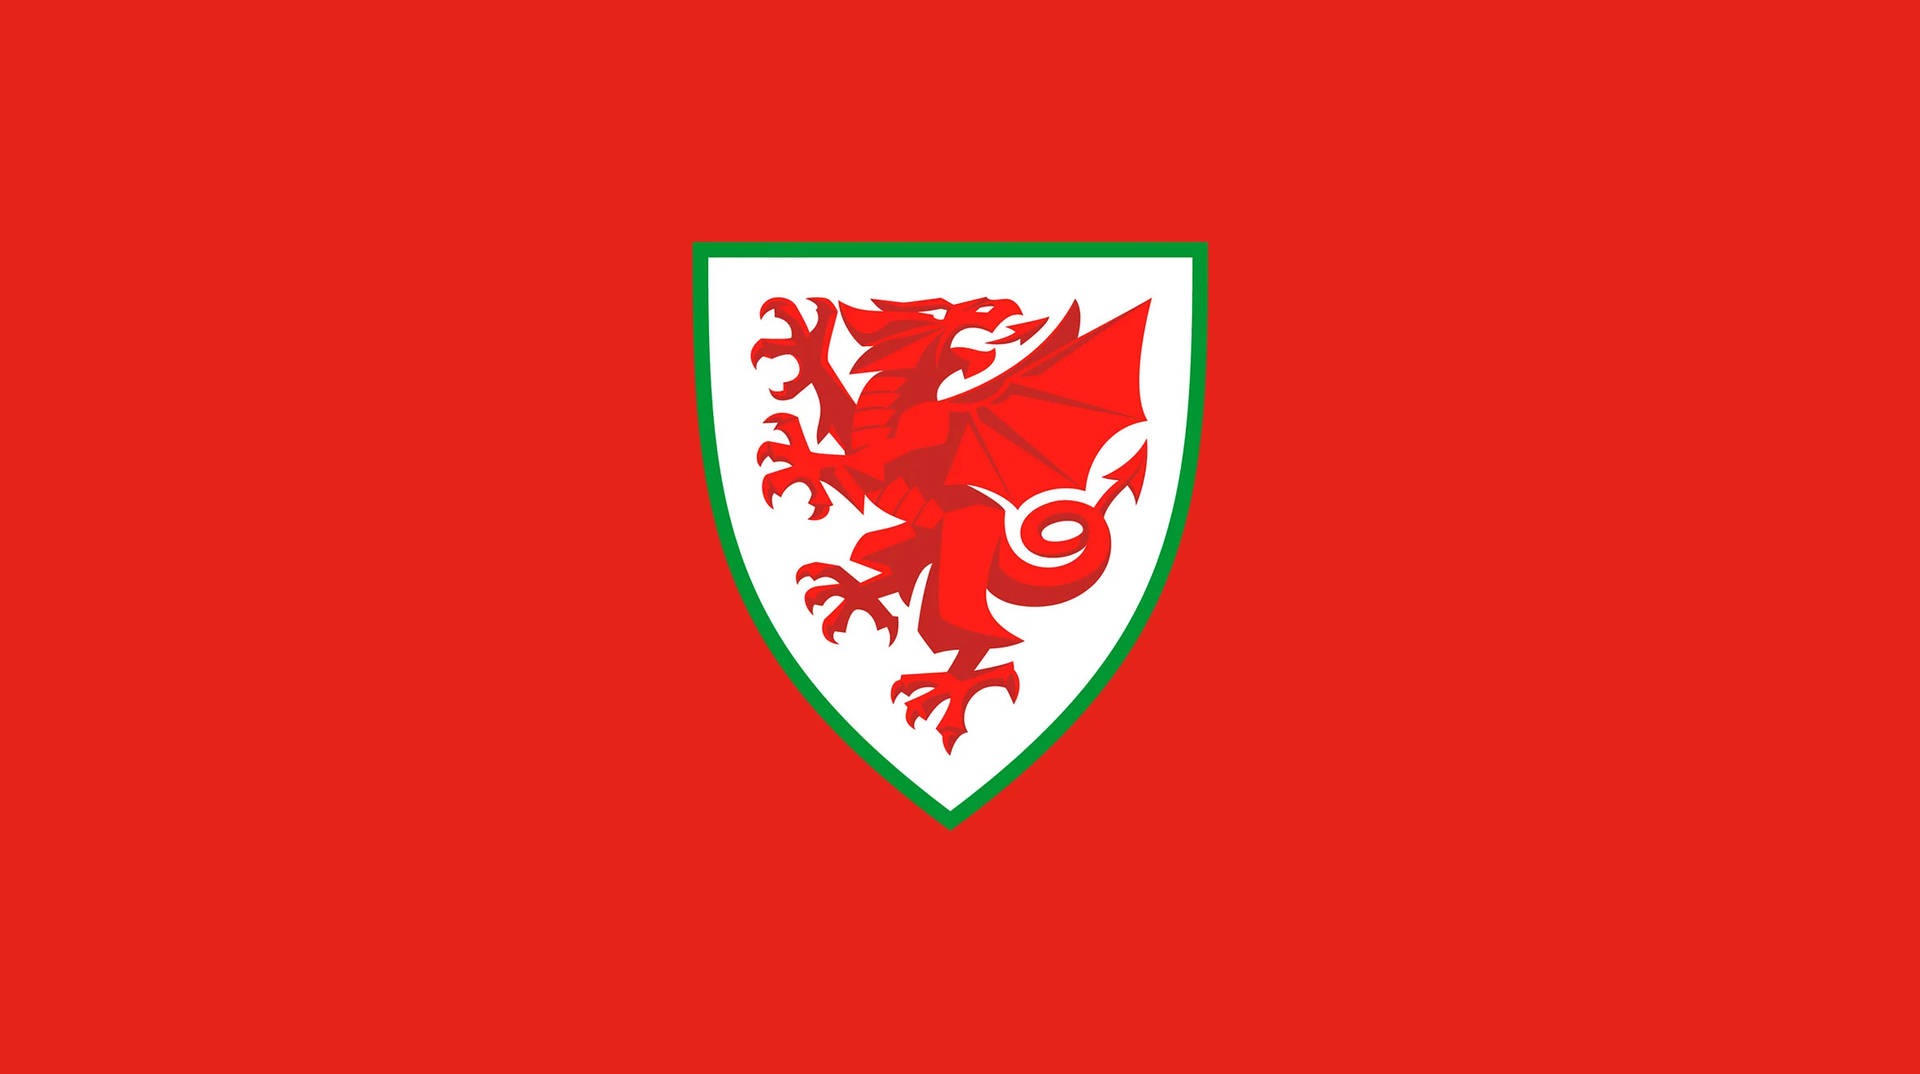 Wales National Football Team Shield Emblem Wallpaper